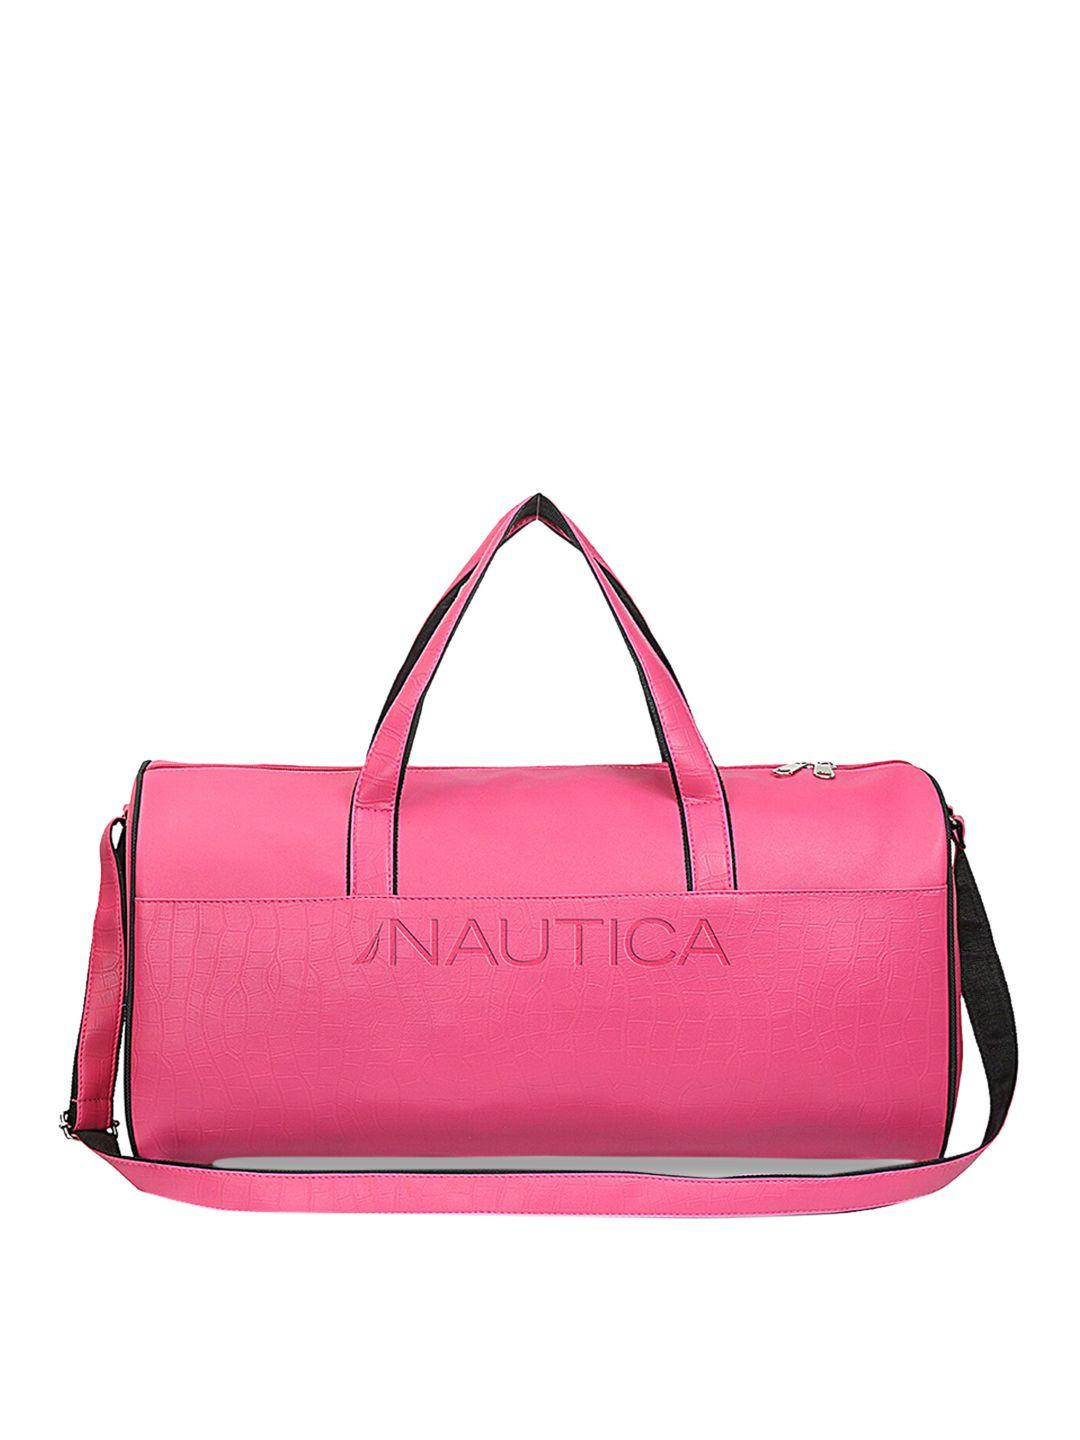 nautica textured duffel bag